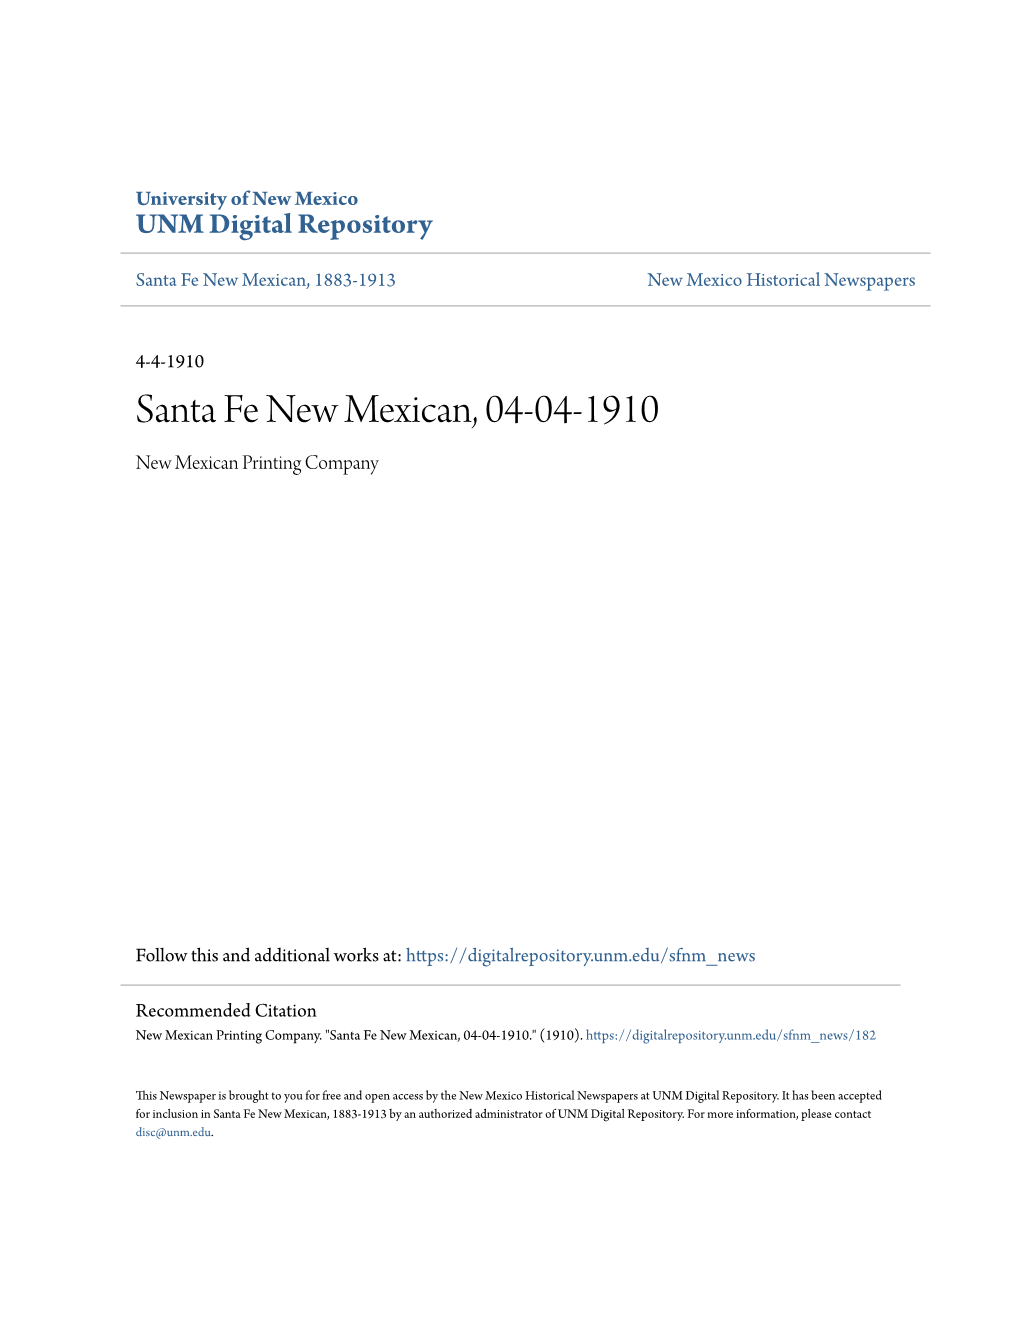 Santa Fe New Mexican, 04-04-1910 New Mexican Printing Company